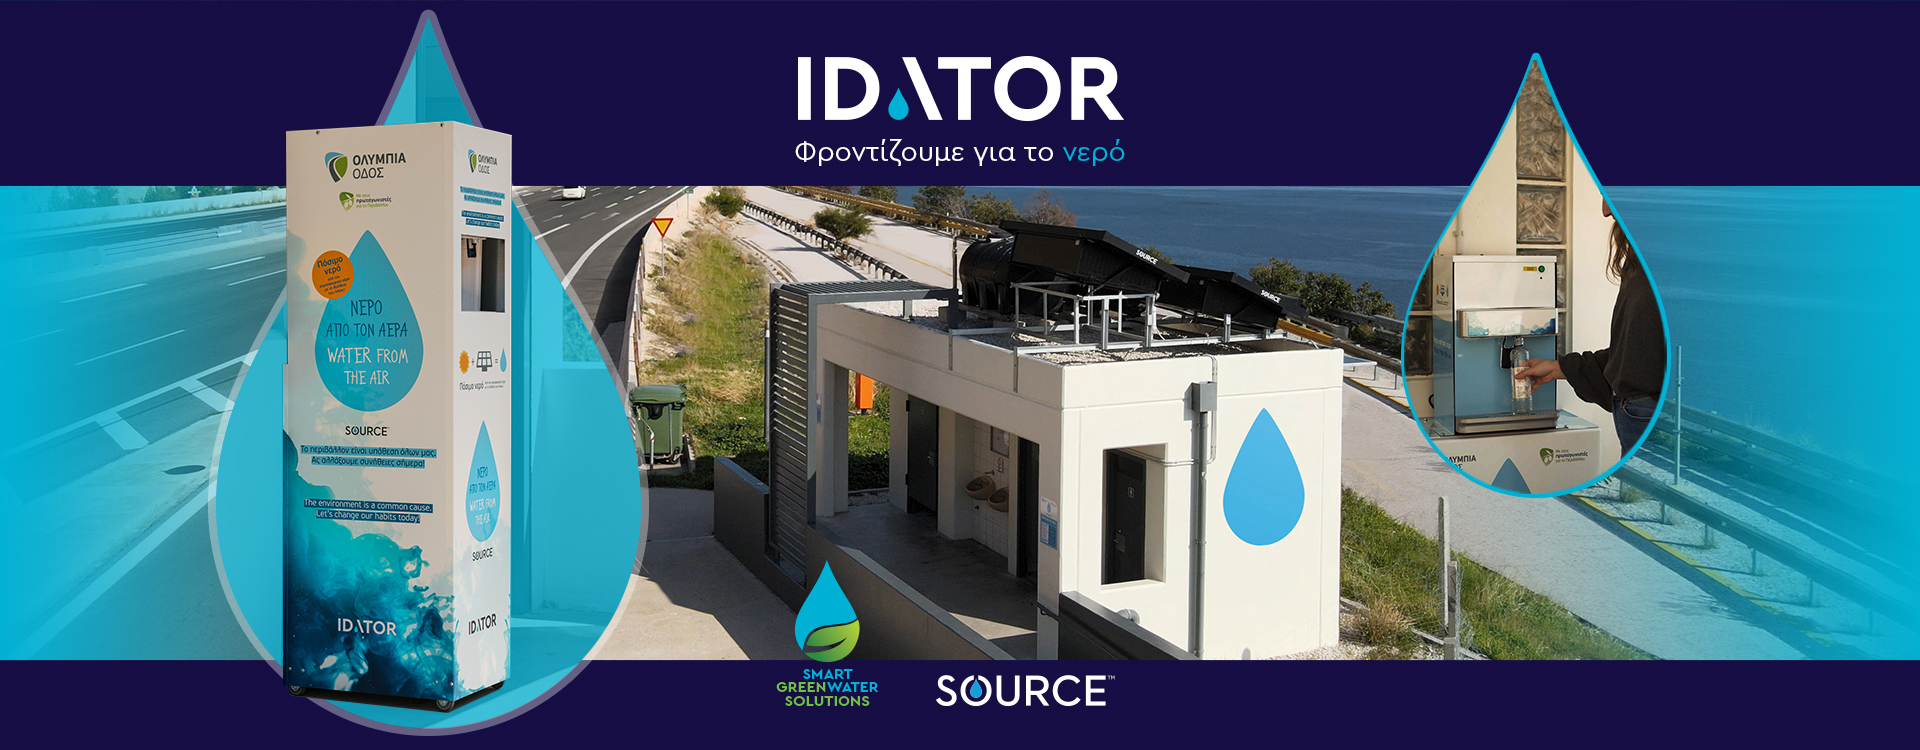 <h1>Ενίσχυση της συνεργασίας της Idator με την Ολυμπία Οδό για παραγωγή πόσιμου νερού από τον ατμοσφαιρικό αέρα</h1>